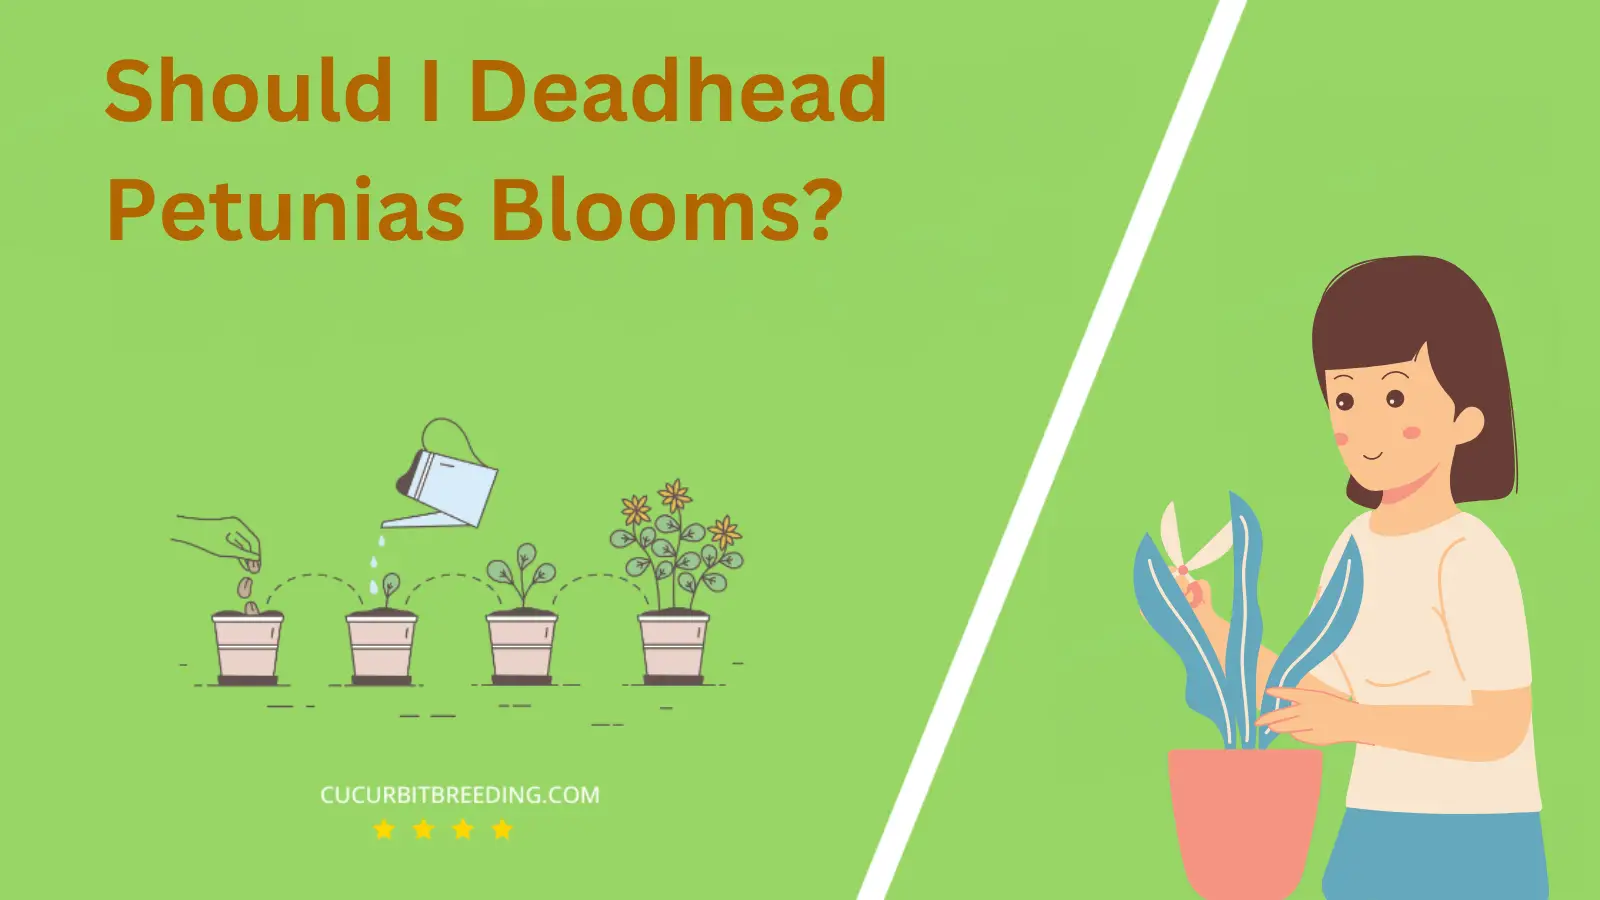 Should I Deadhead Petunias Blooms?